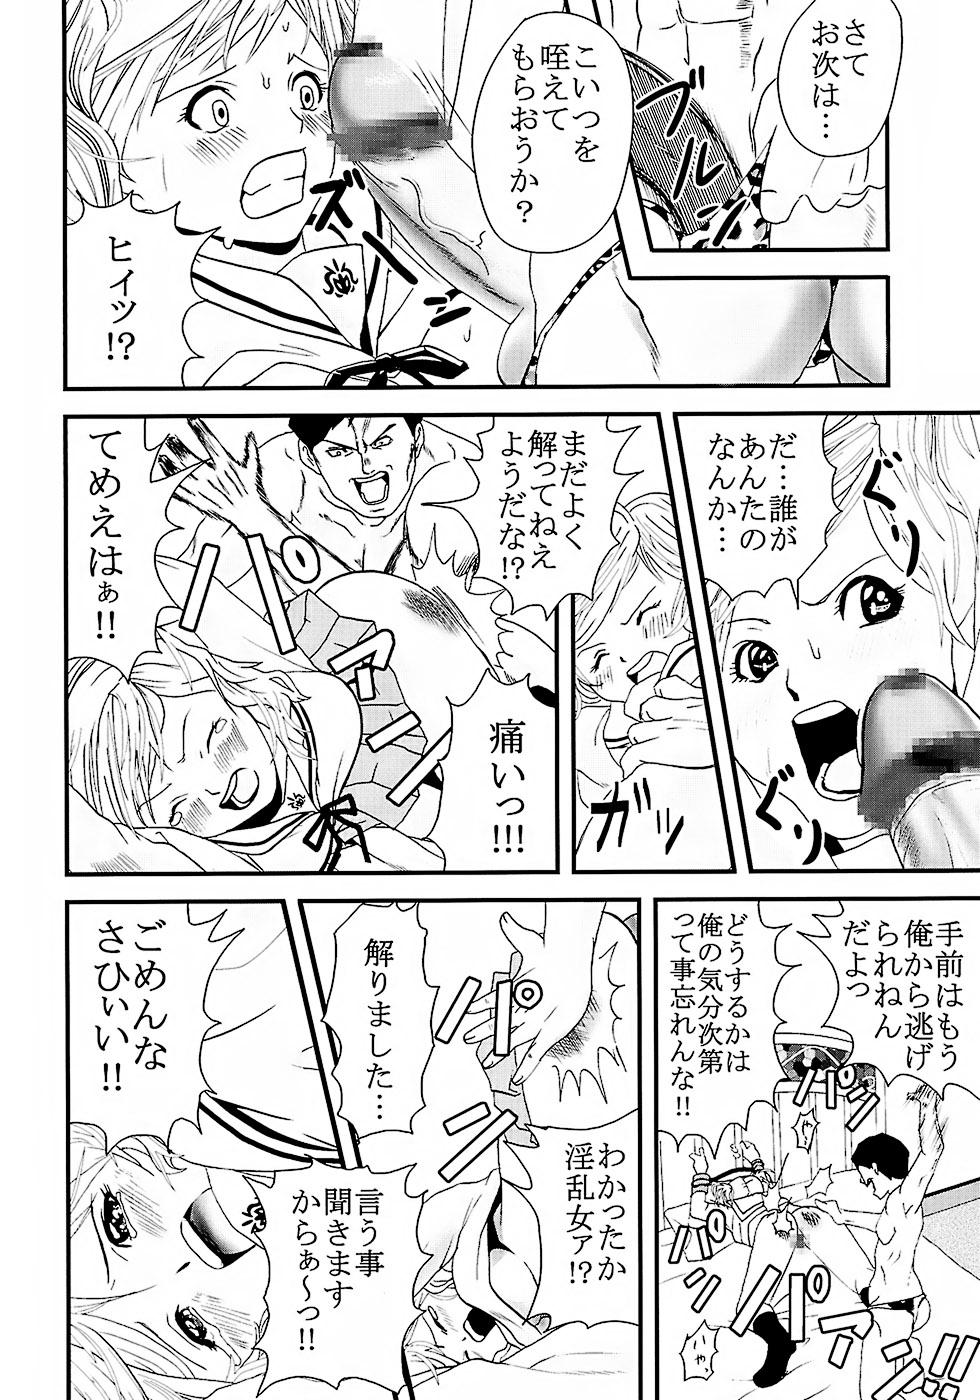 Teensex Chitsui Gentei Nakadashi Limited vol.2 - Hatsukoi limited Boquete - Page 7